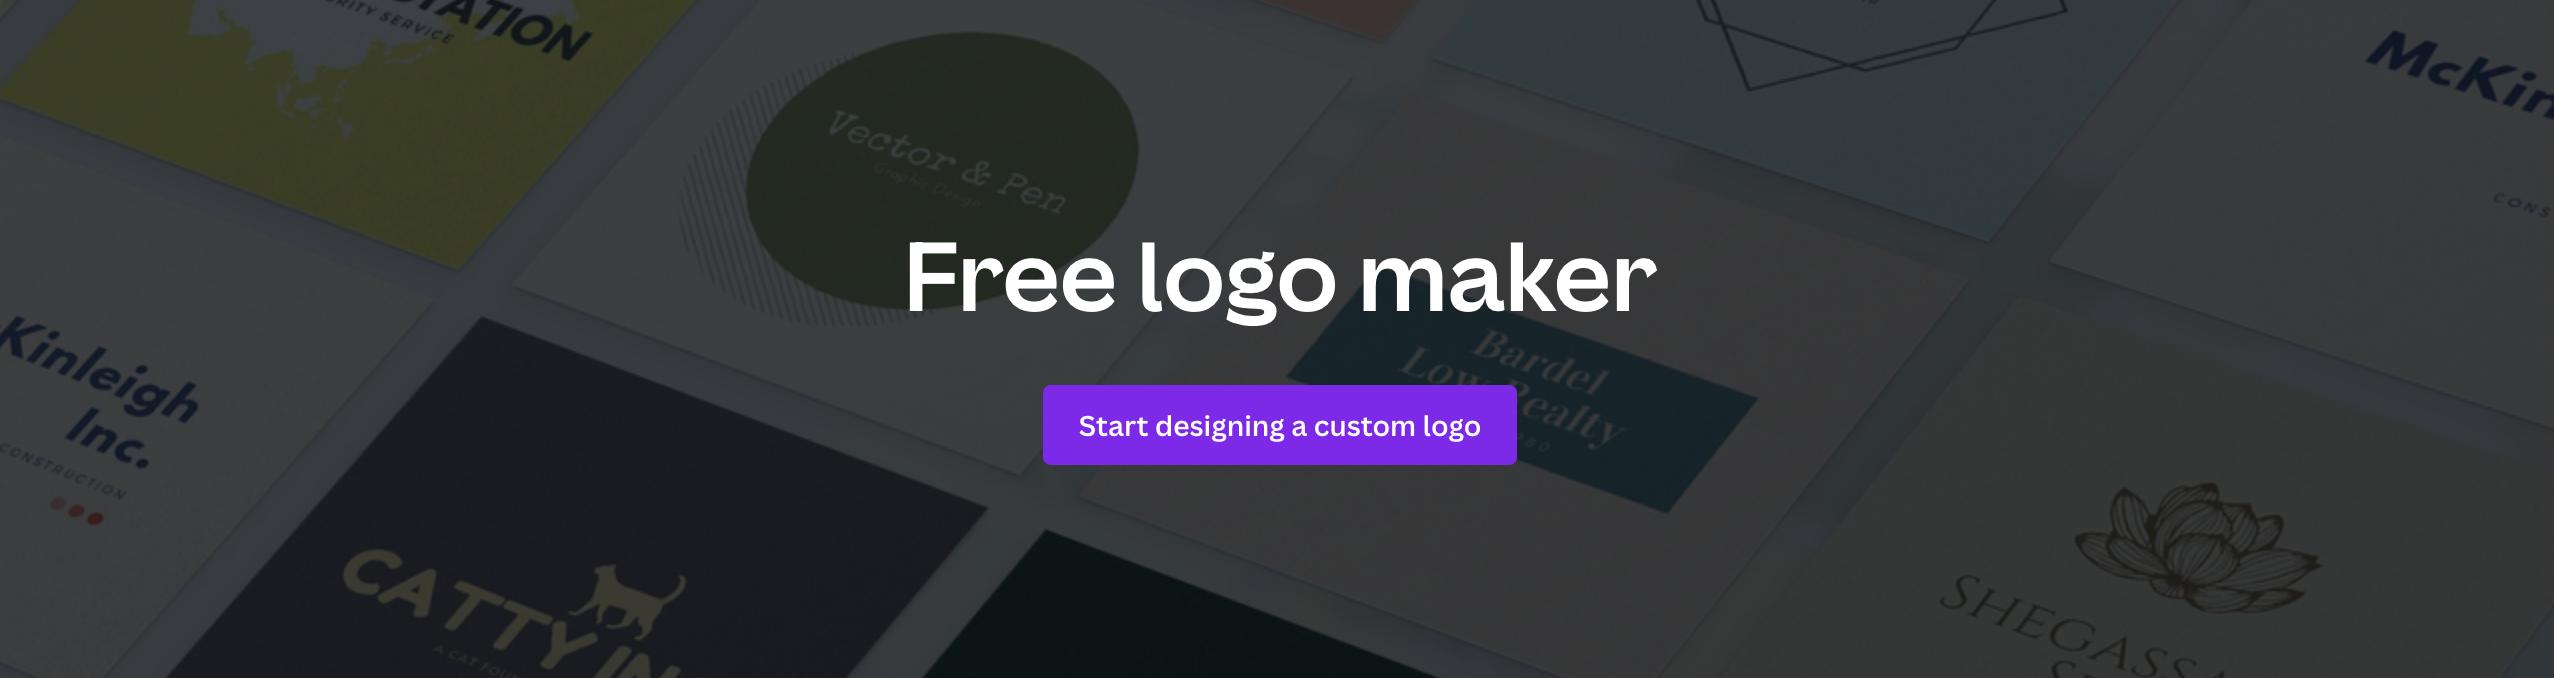 Canva logo maker homepage